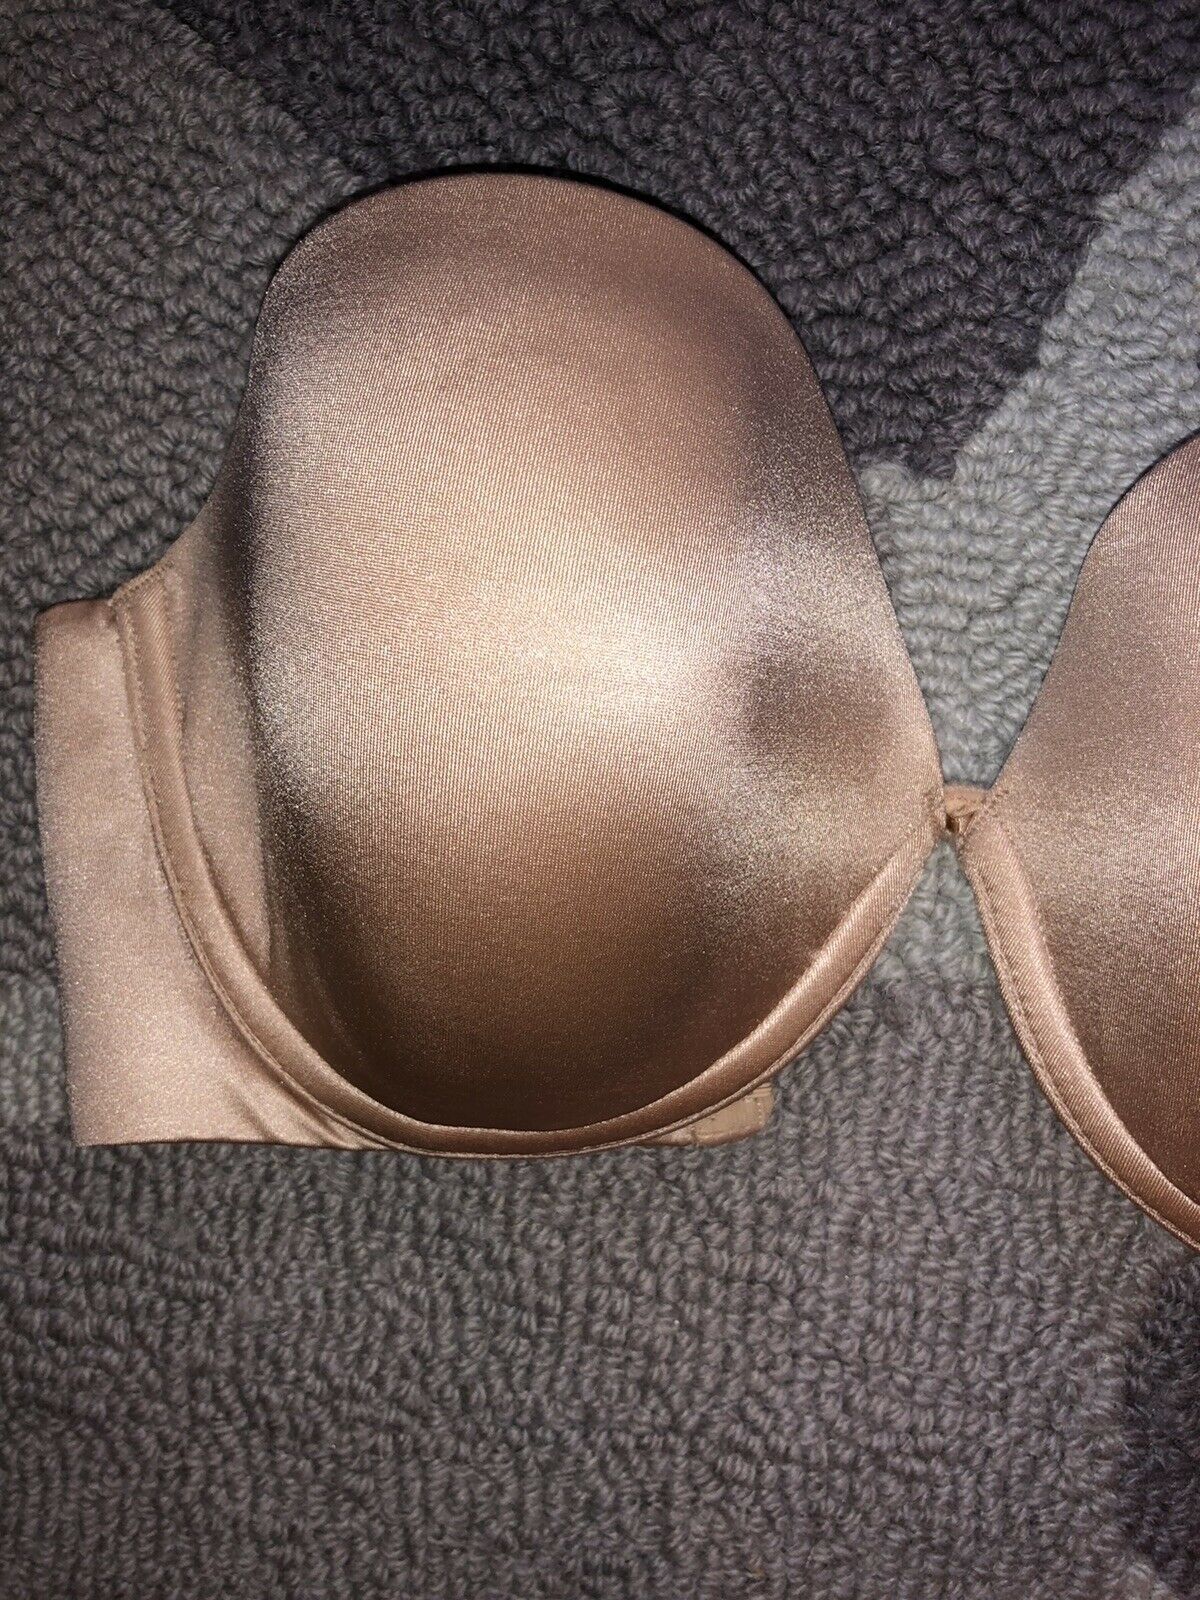 Womens Gilligan & O’Malley Nursing Bra Underwired Soft Nude Beige Size 36DDD